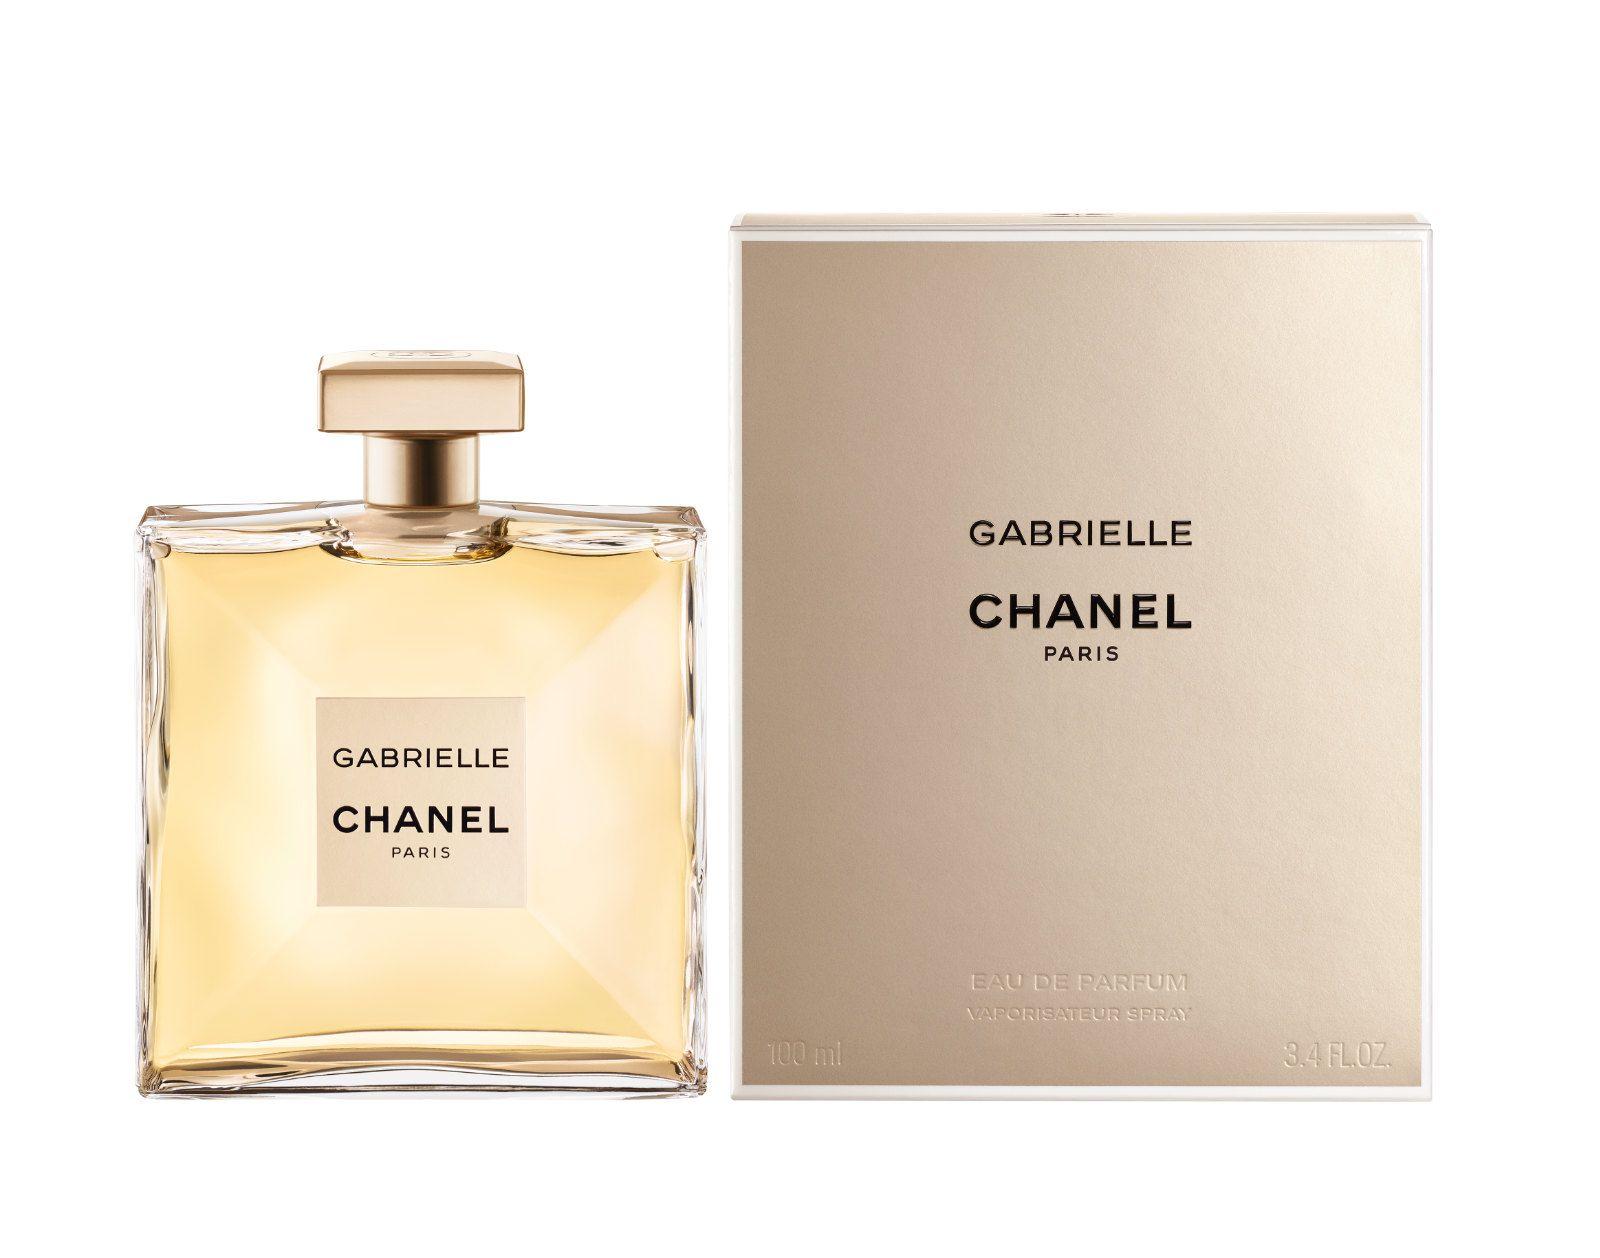 Gabrielle Chanel Paris Logo - Gabrielle Chanel fragrance introduced; Kristen Stewart to model in ...